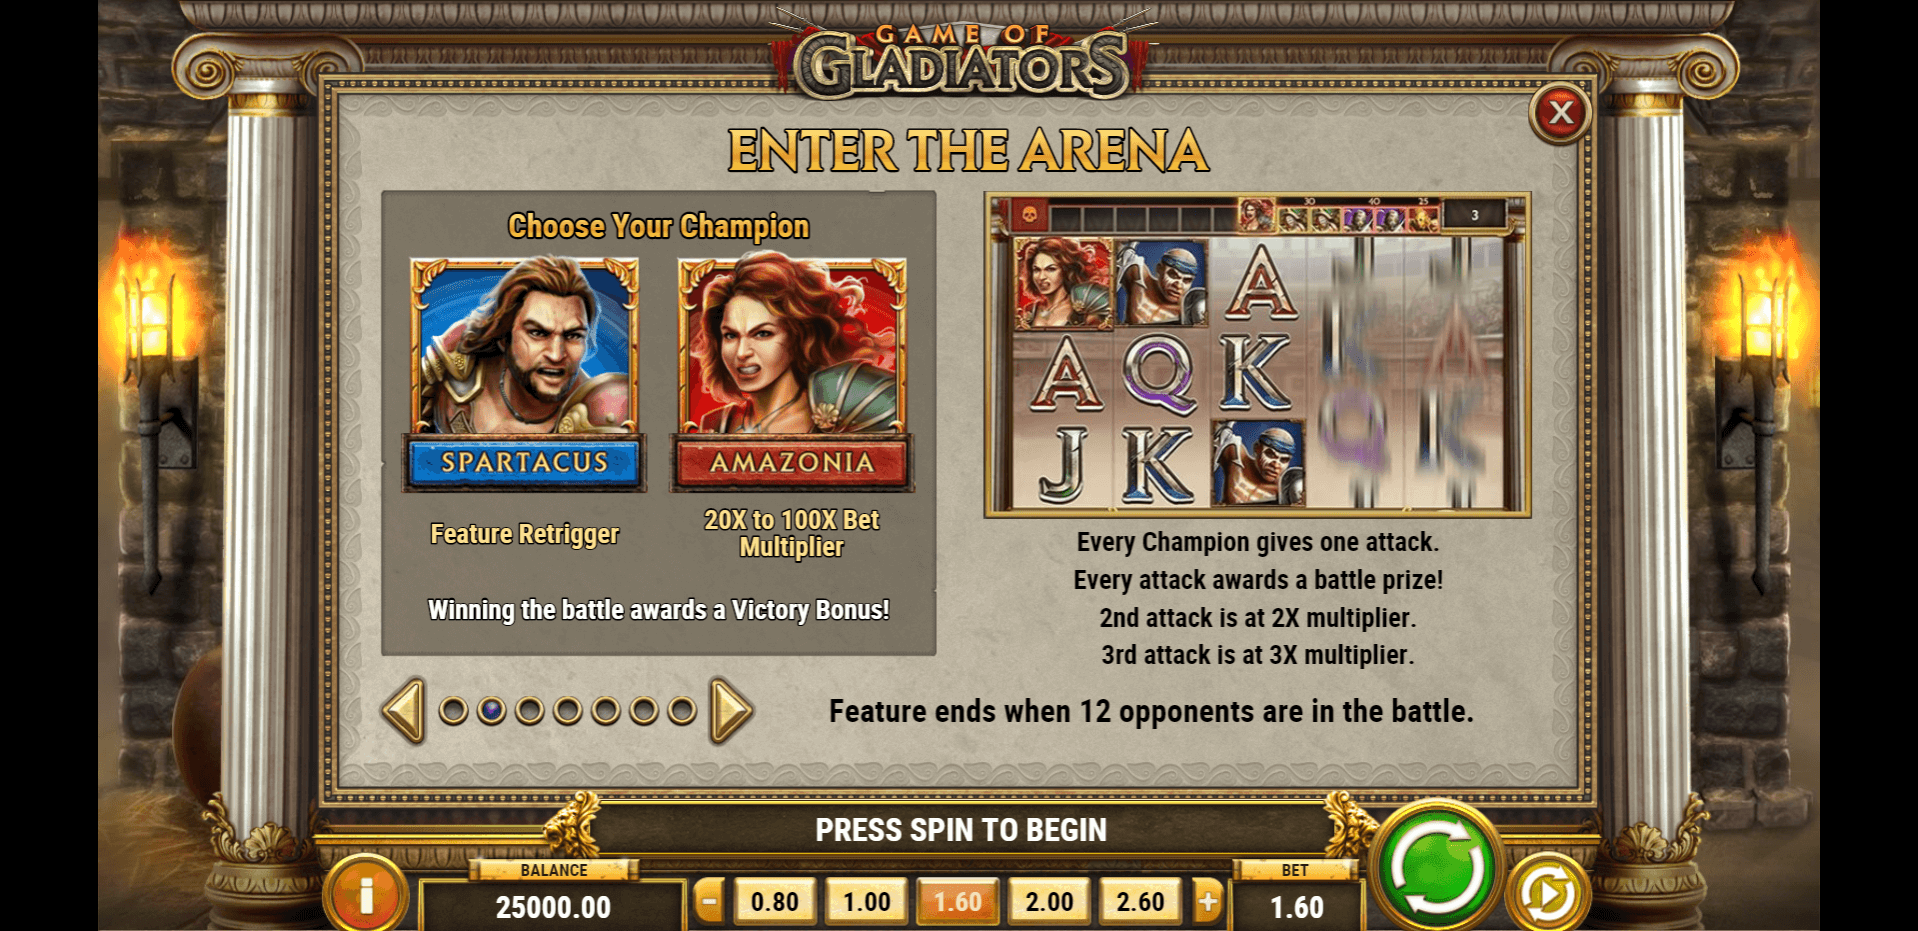 game of gladiators slot machine detail image 1